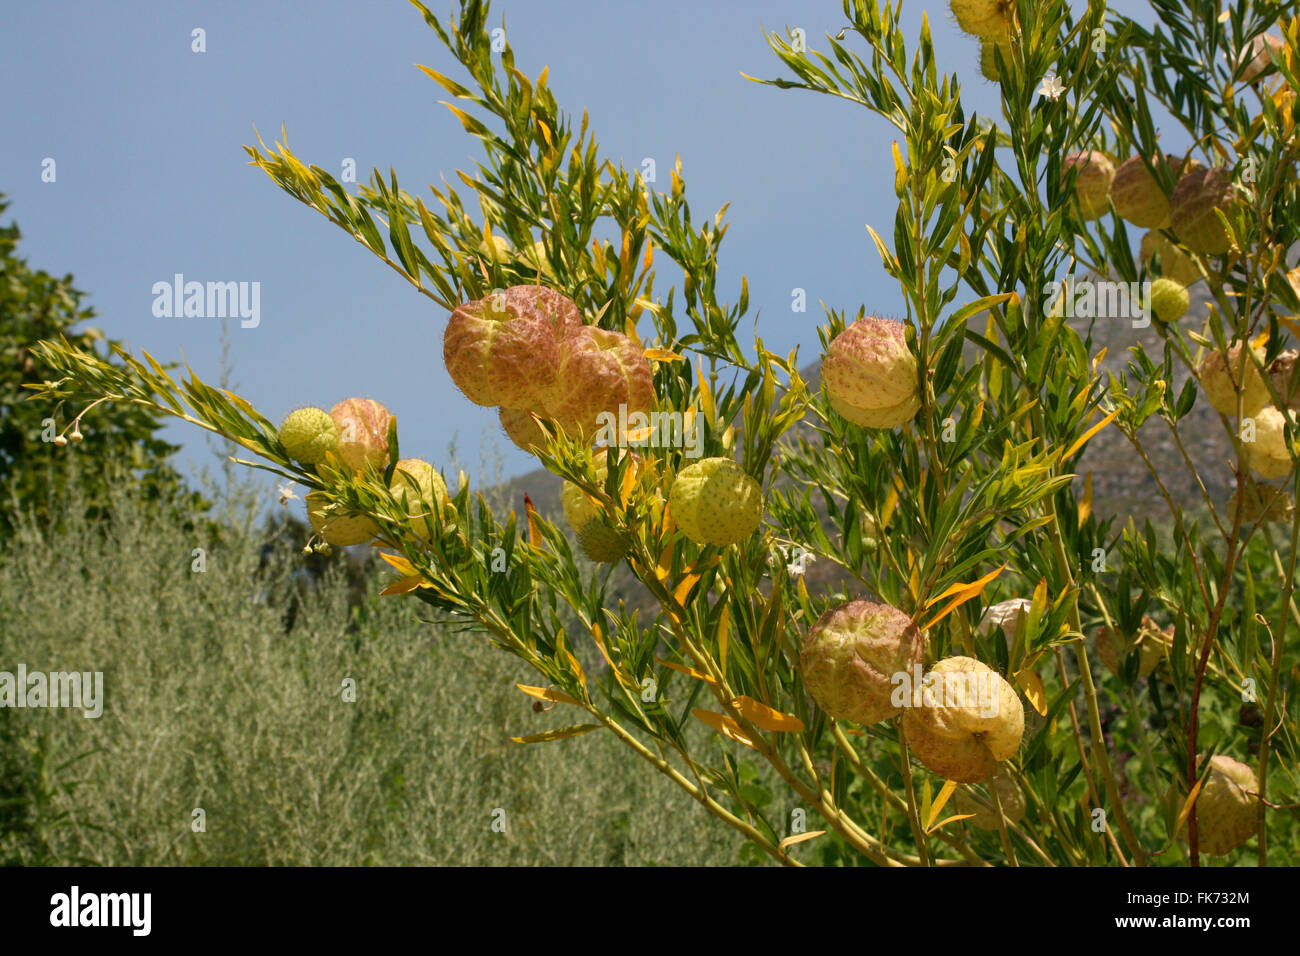 Swan milkweed is an ornamental plant often grown to attract butterflies. Stock Photo